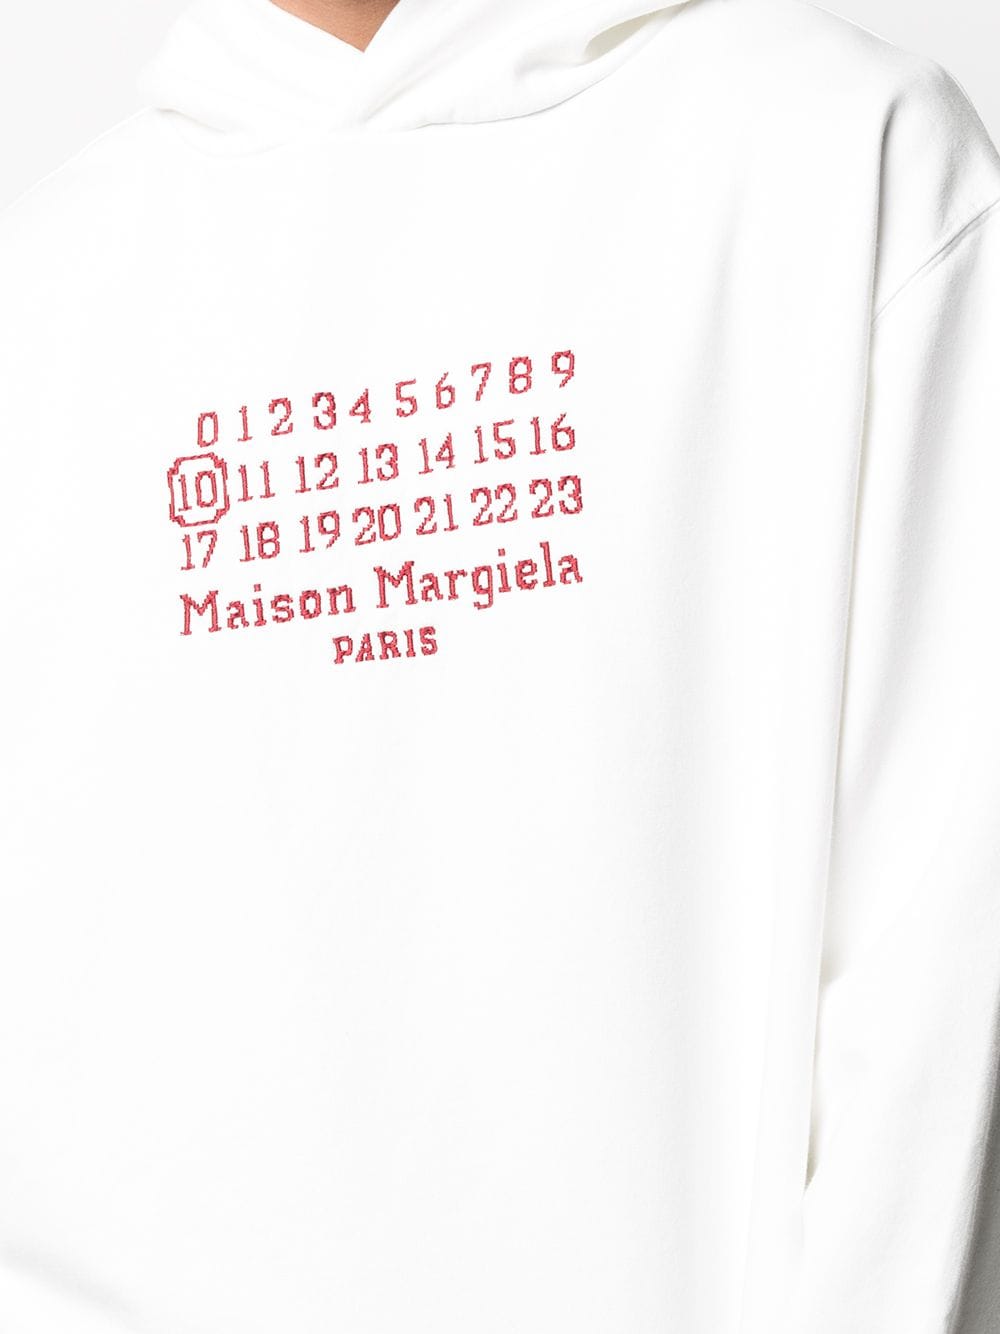 фото Maison margiela худи с вышитым логотипом